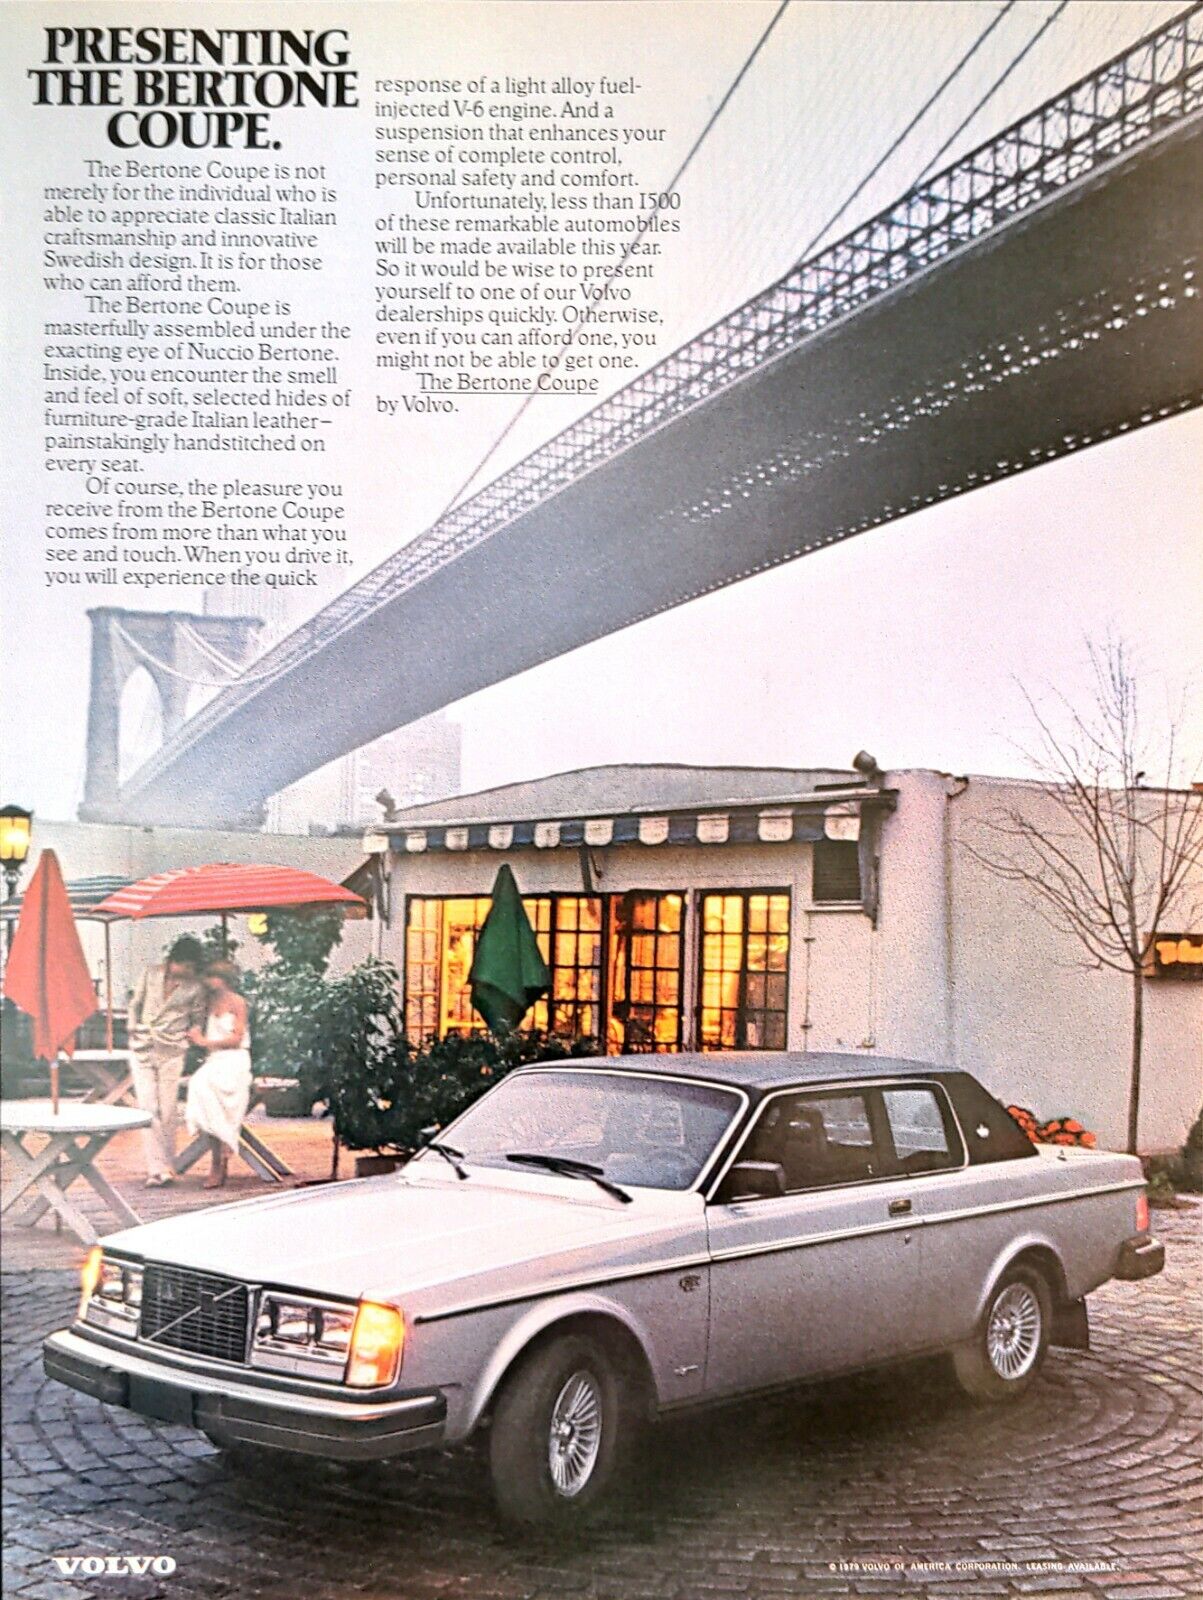 1979 Volvo Bertone Coupe Italian Leather Light Alloy Automobile Vintage Print Ad